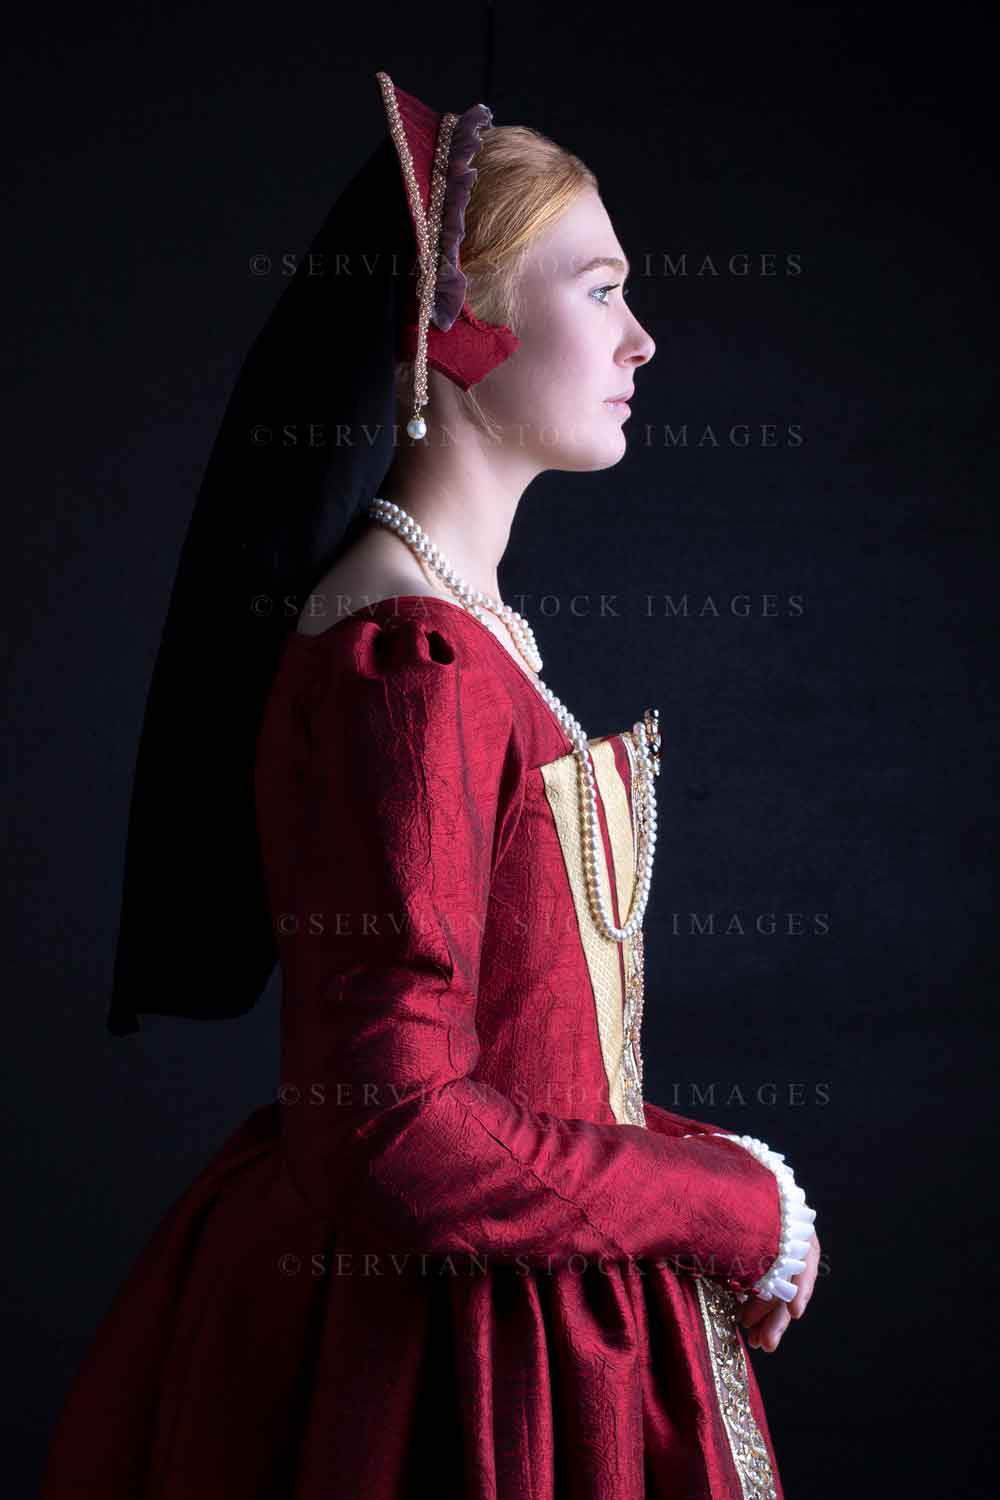 Tudor woman in an ornate red dress  (Lauren 0259)